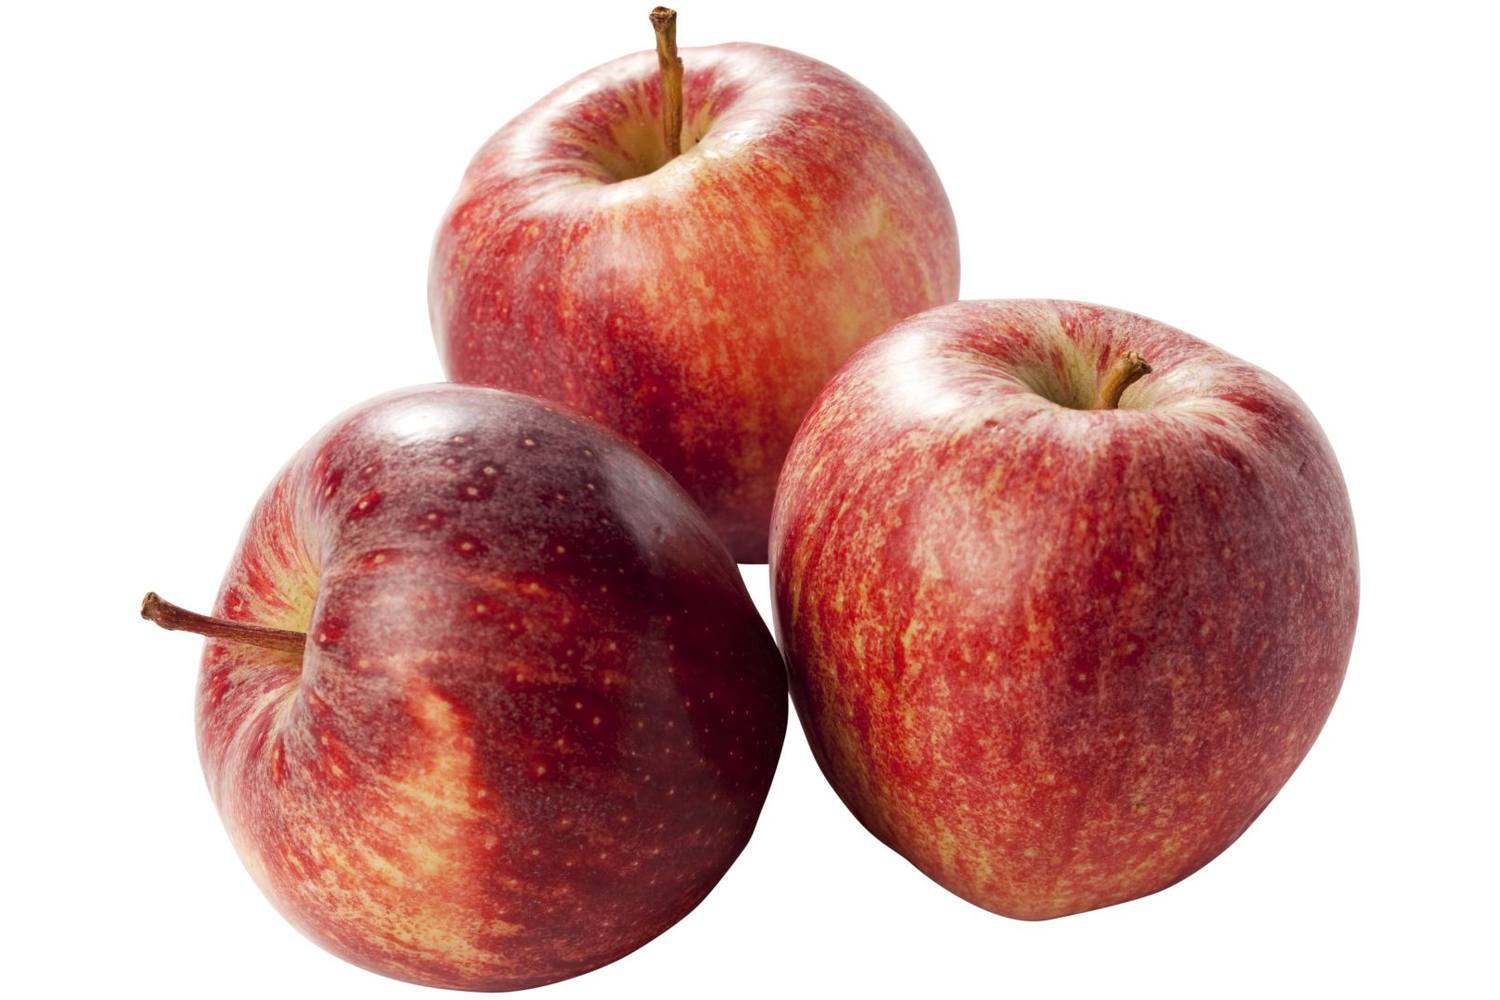 Gala appels kist 6 kilogram 1